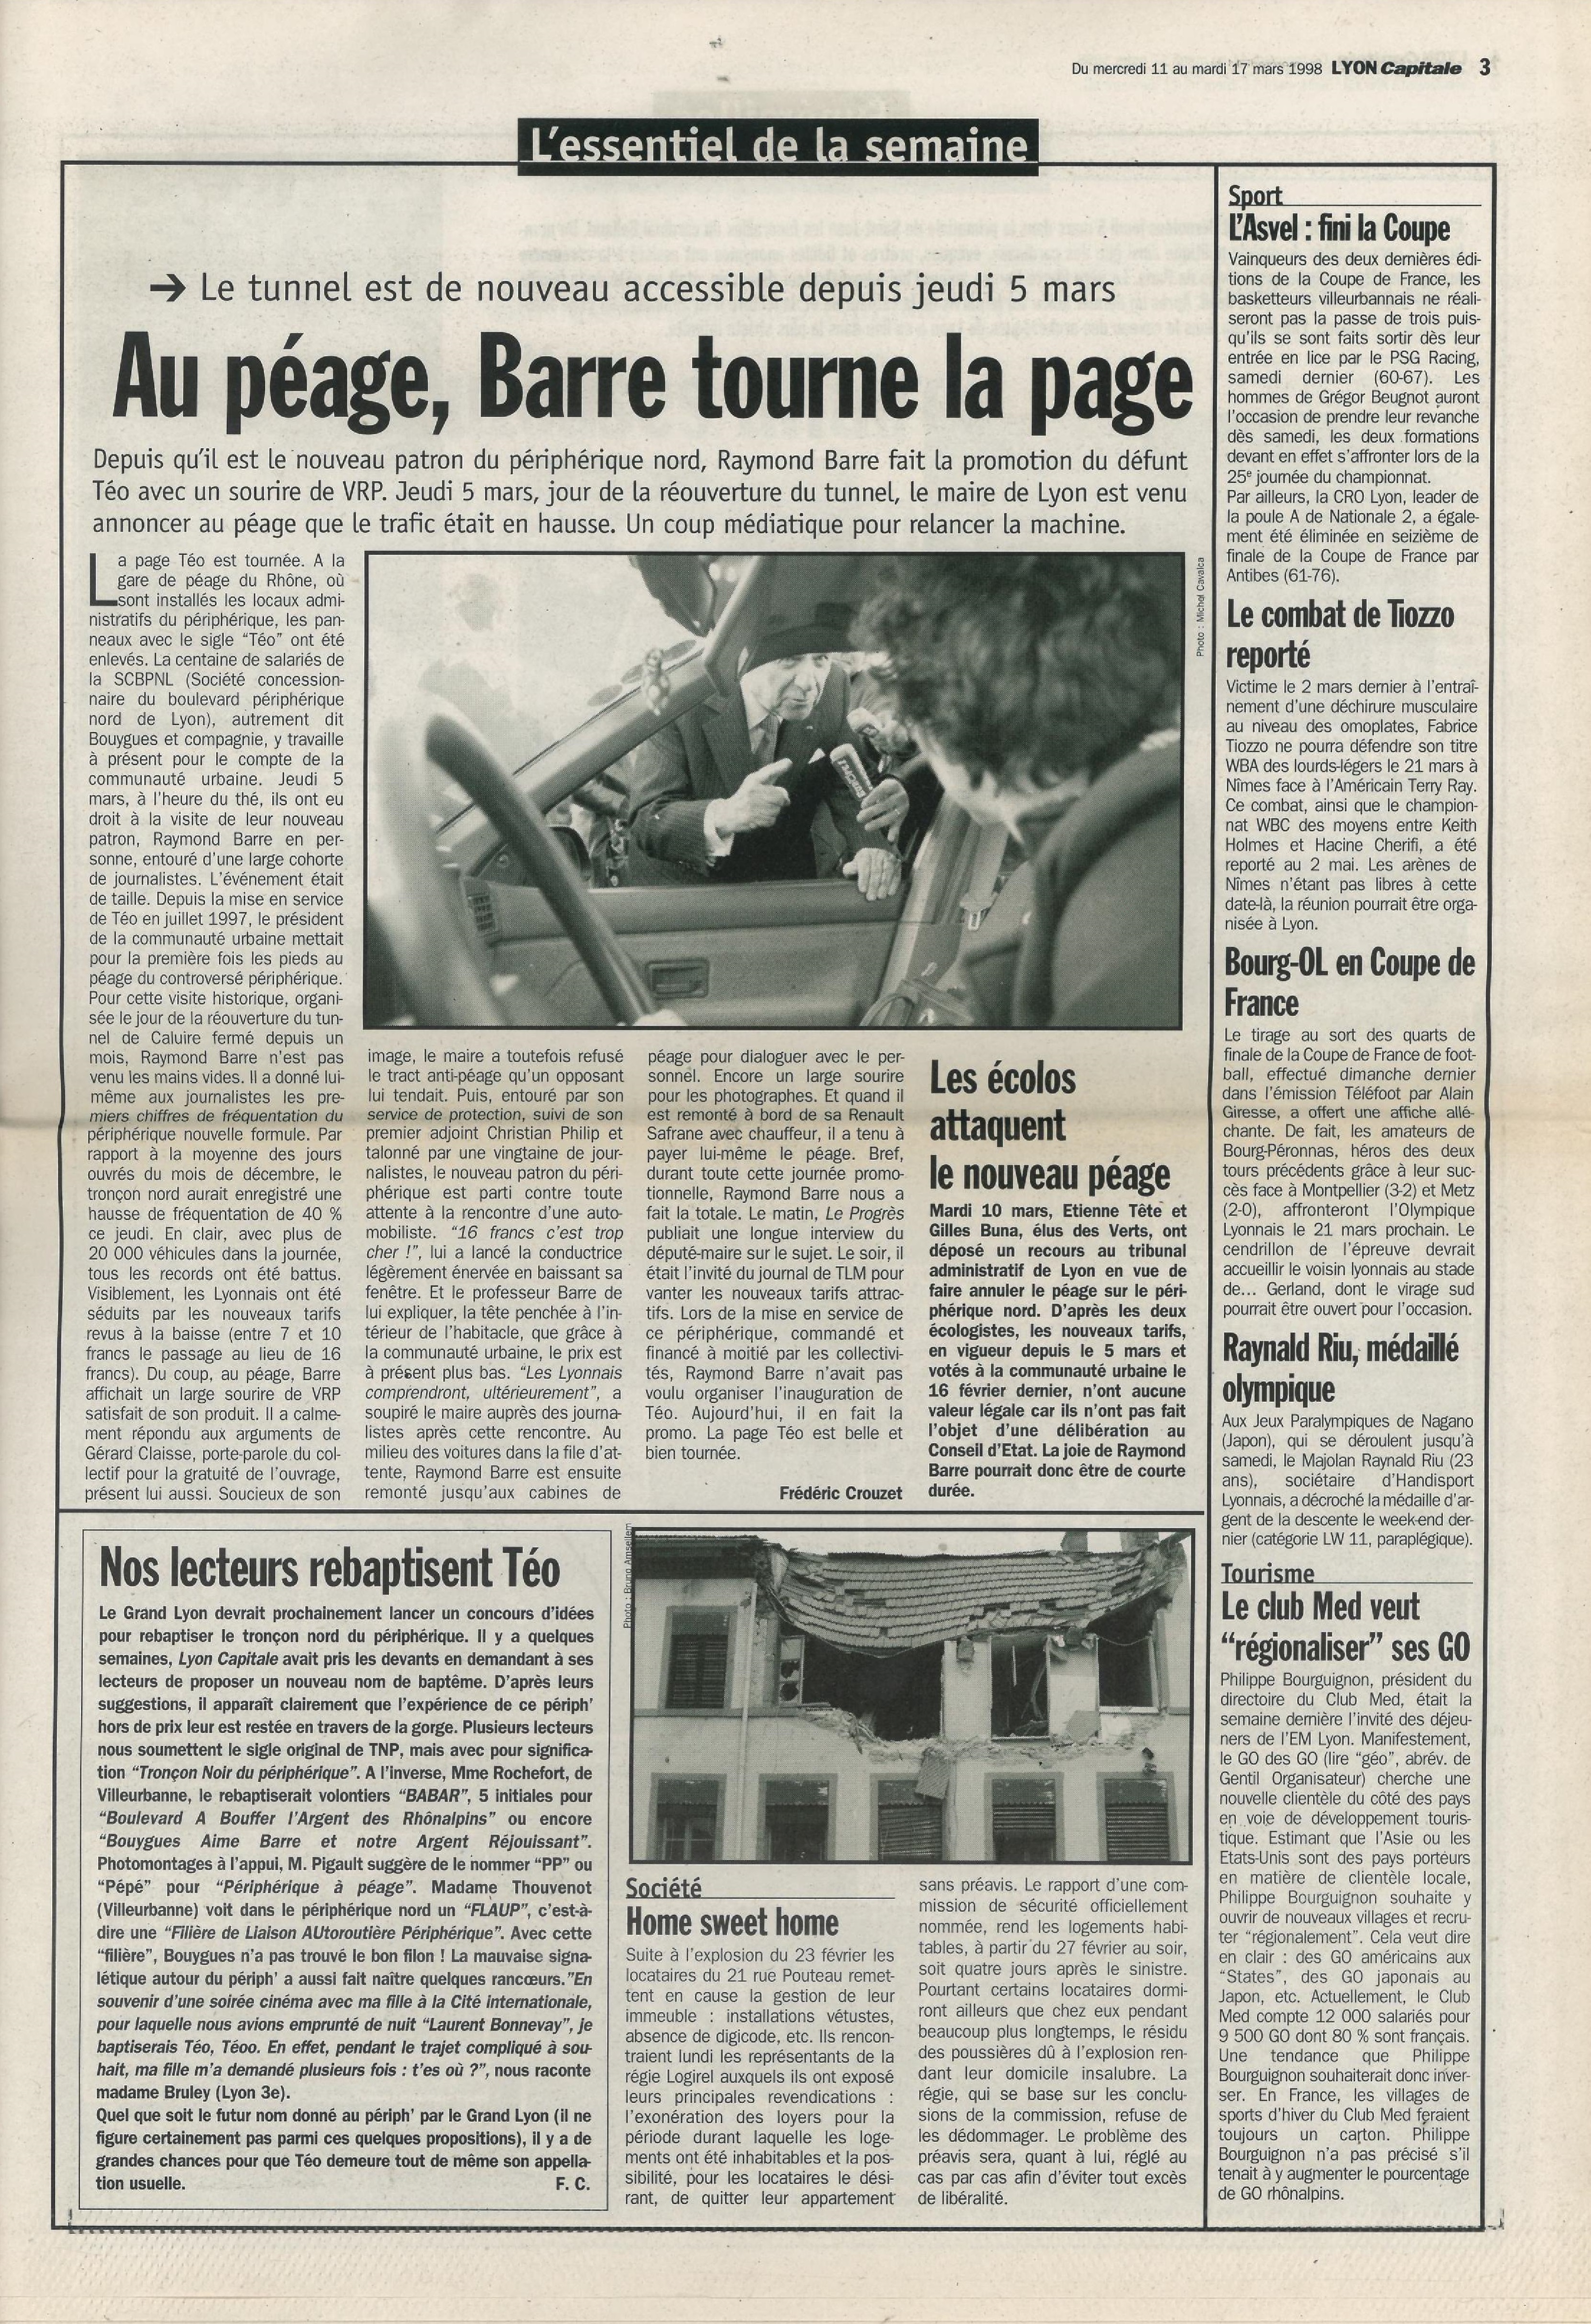 Lyon Capitale n°162, 11 mars 1998, p. 3 © Lyon Capitale